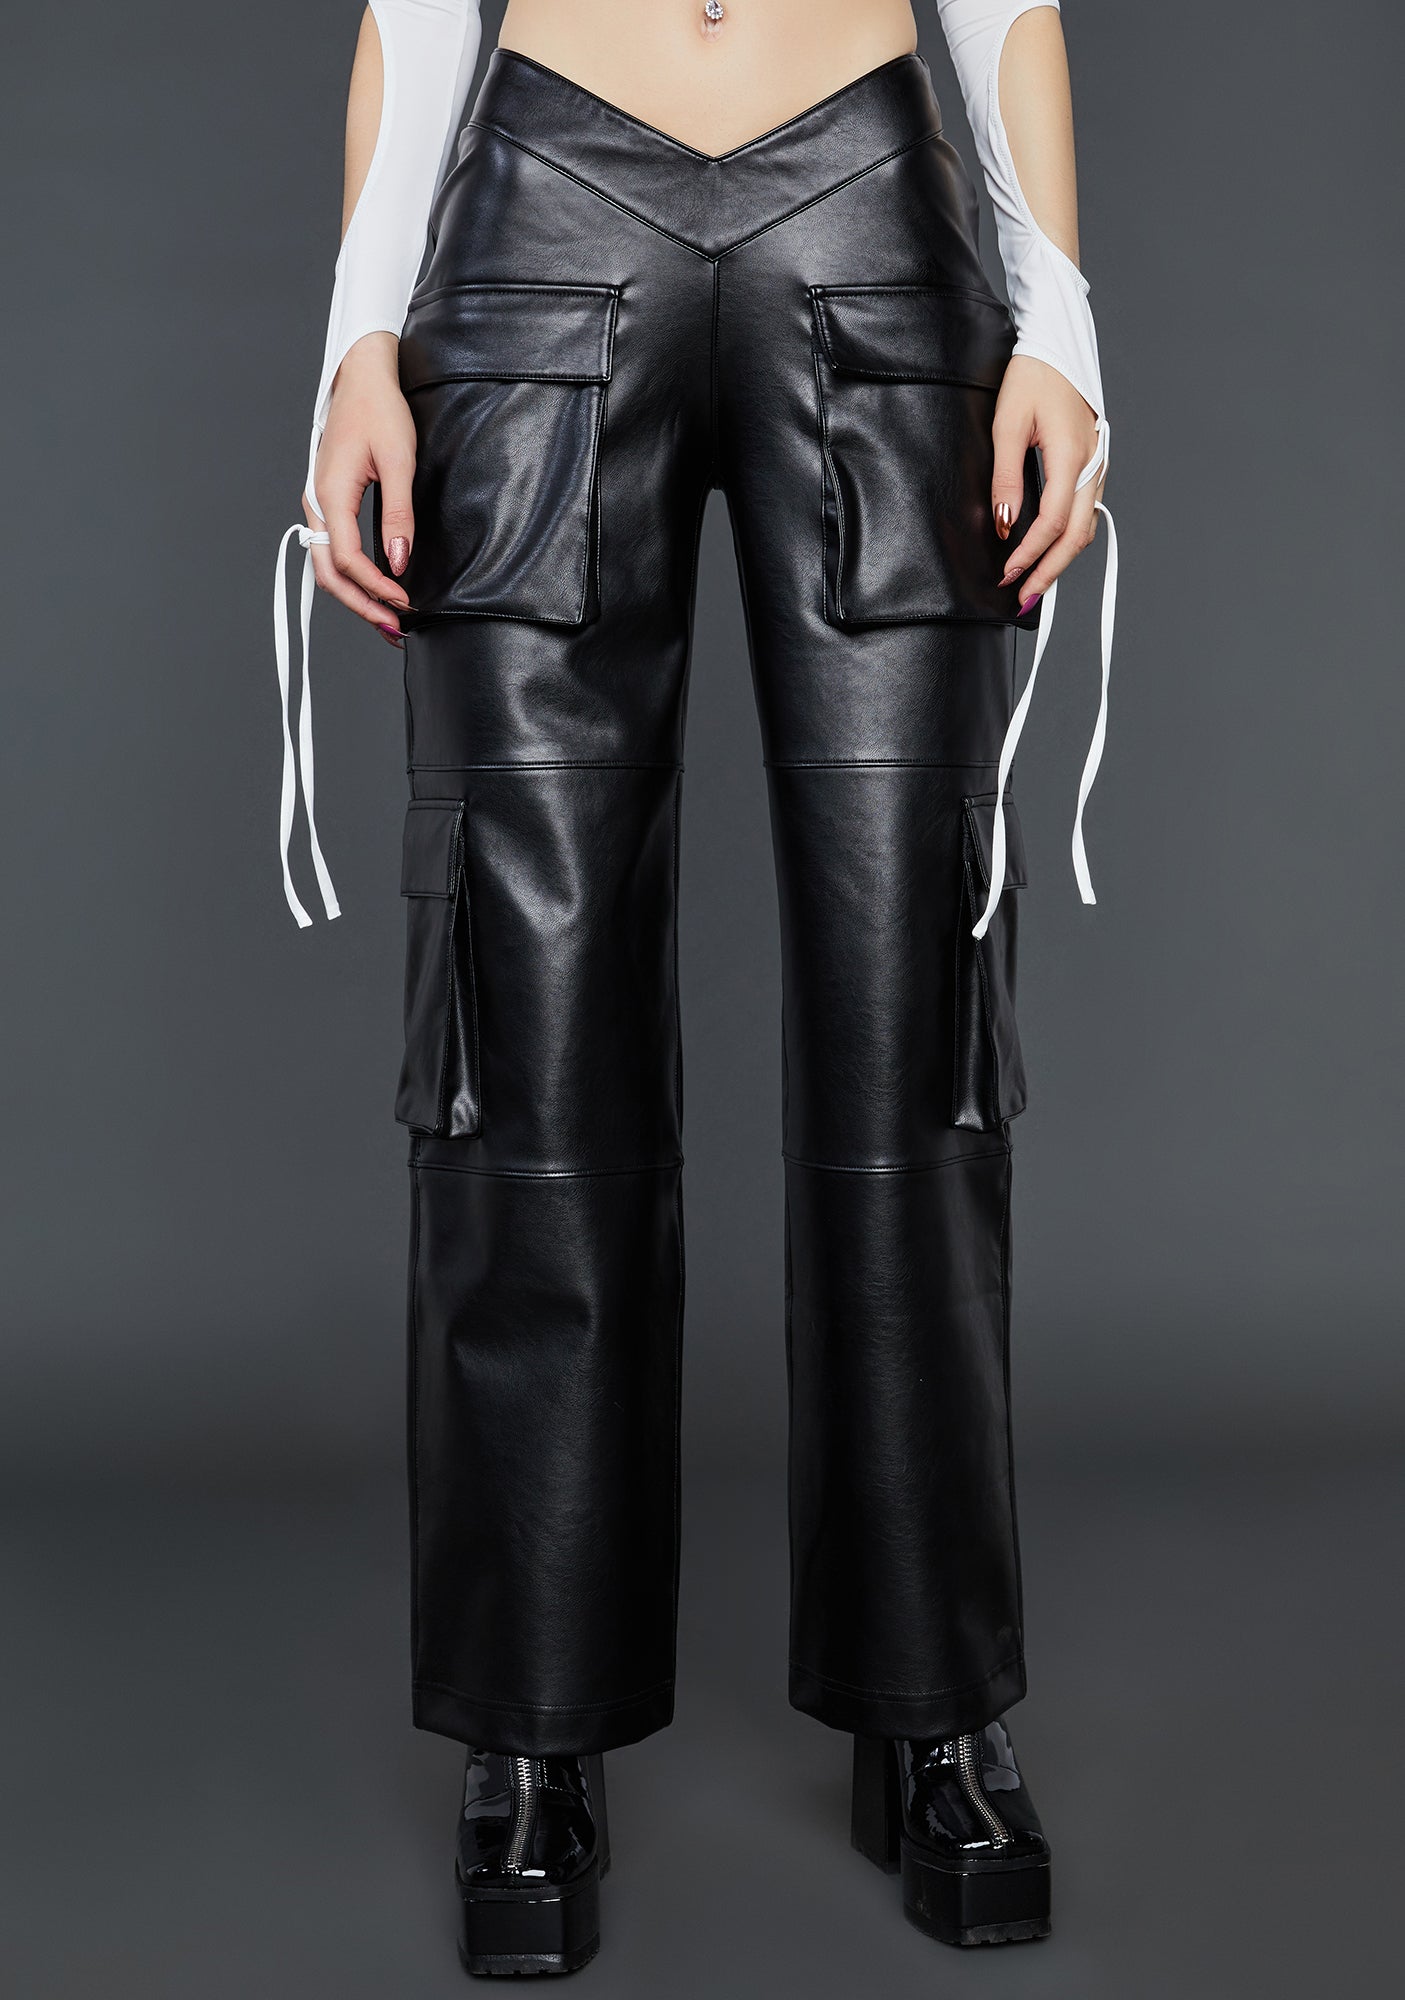 Women's Black Patent Leather Vegan Super Stretch Slash Pants by Demi Loon